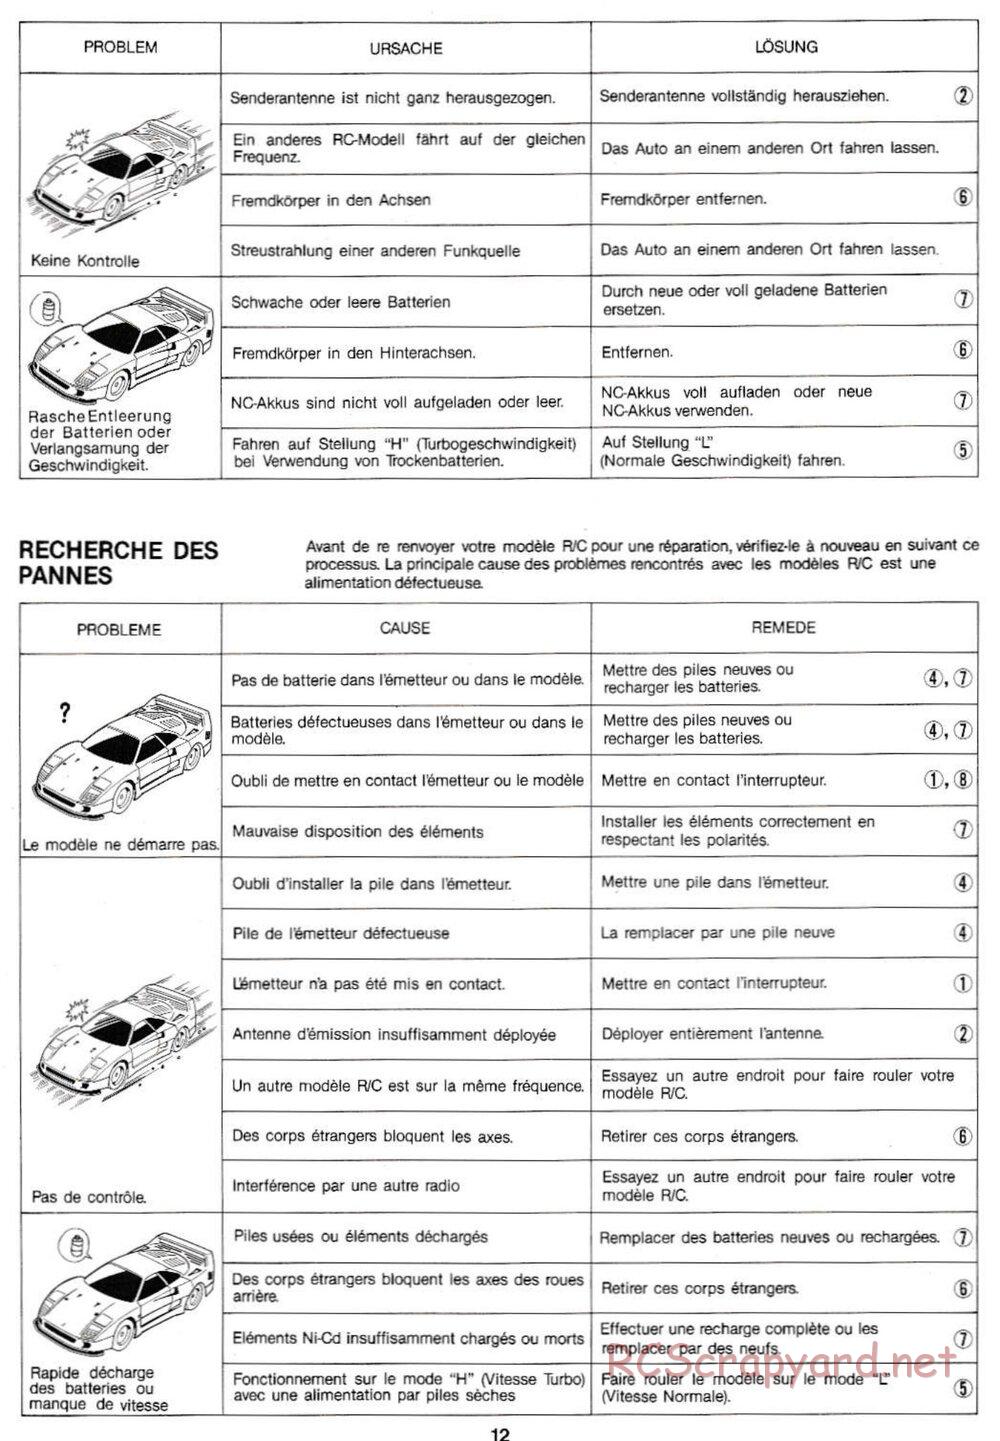 Tamiya - Ferrari F40 QD Chassis - Manual - Page 12